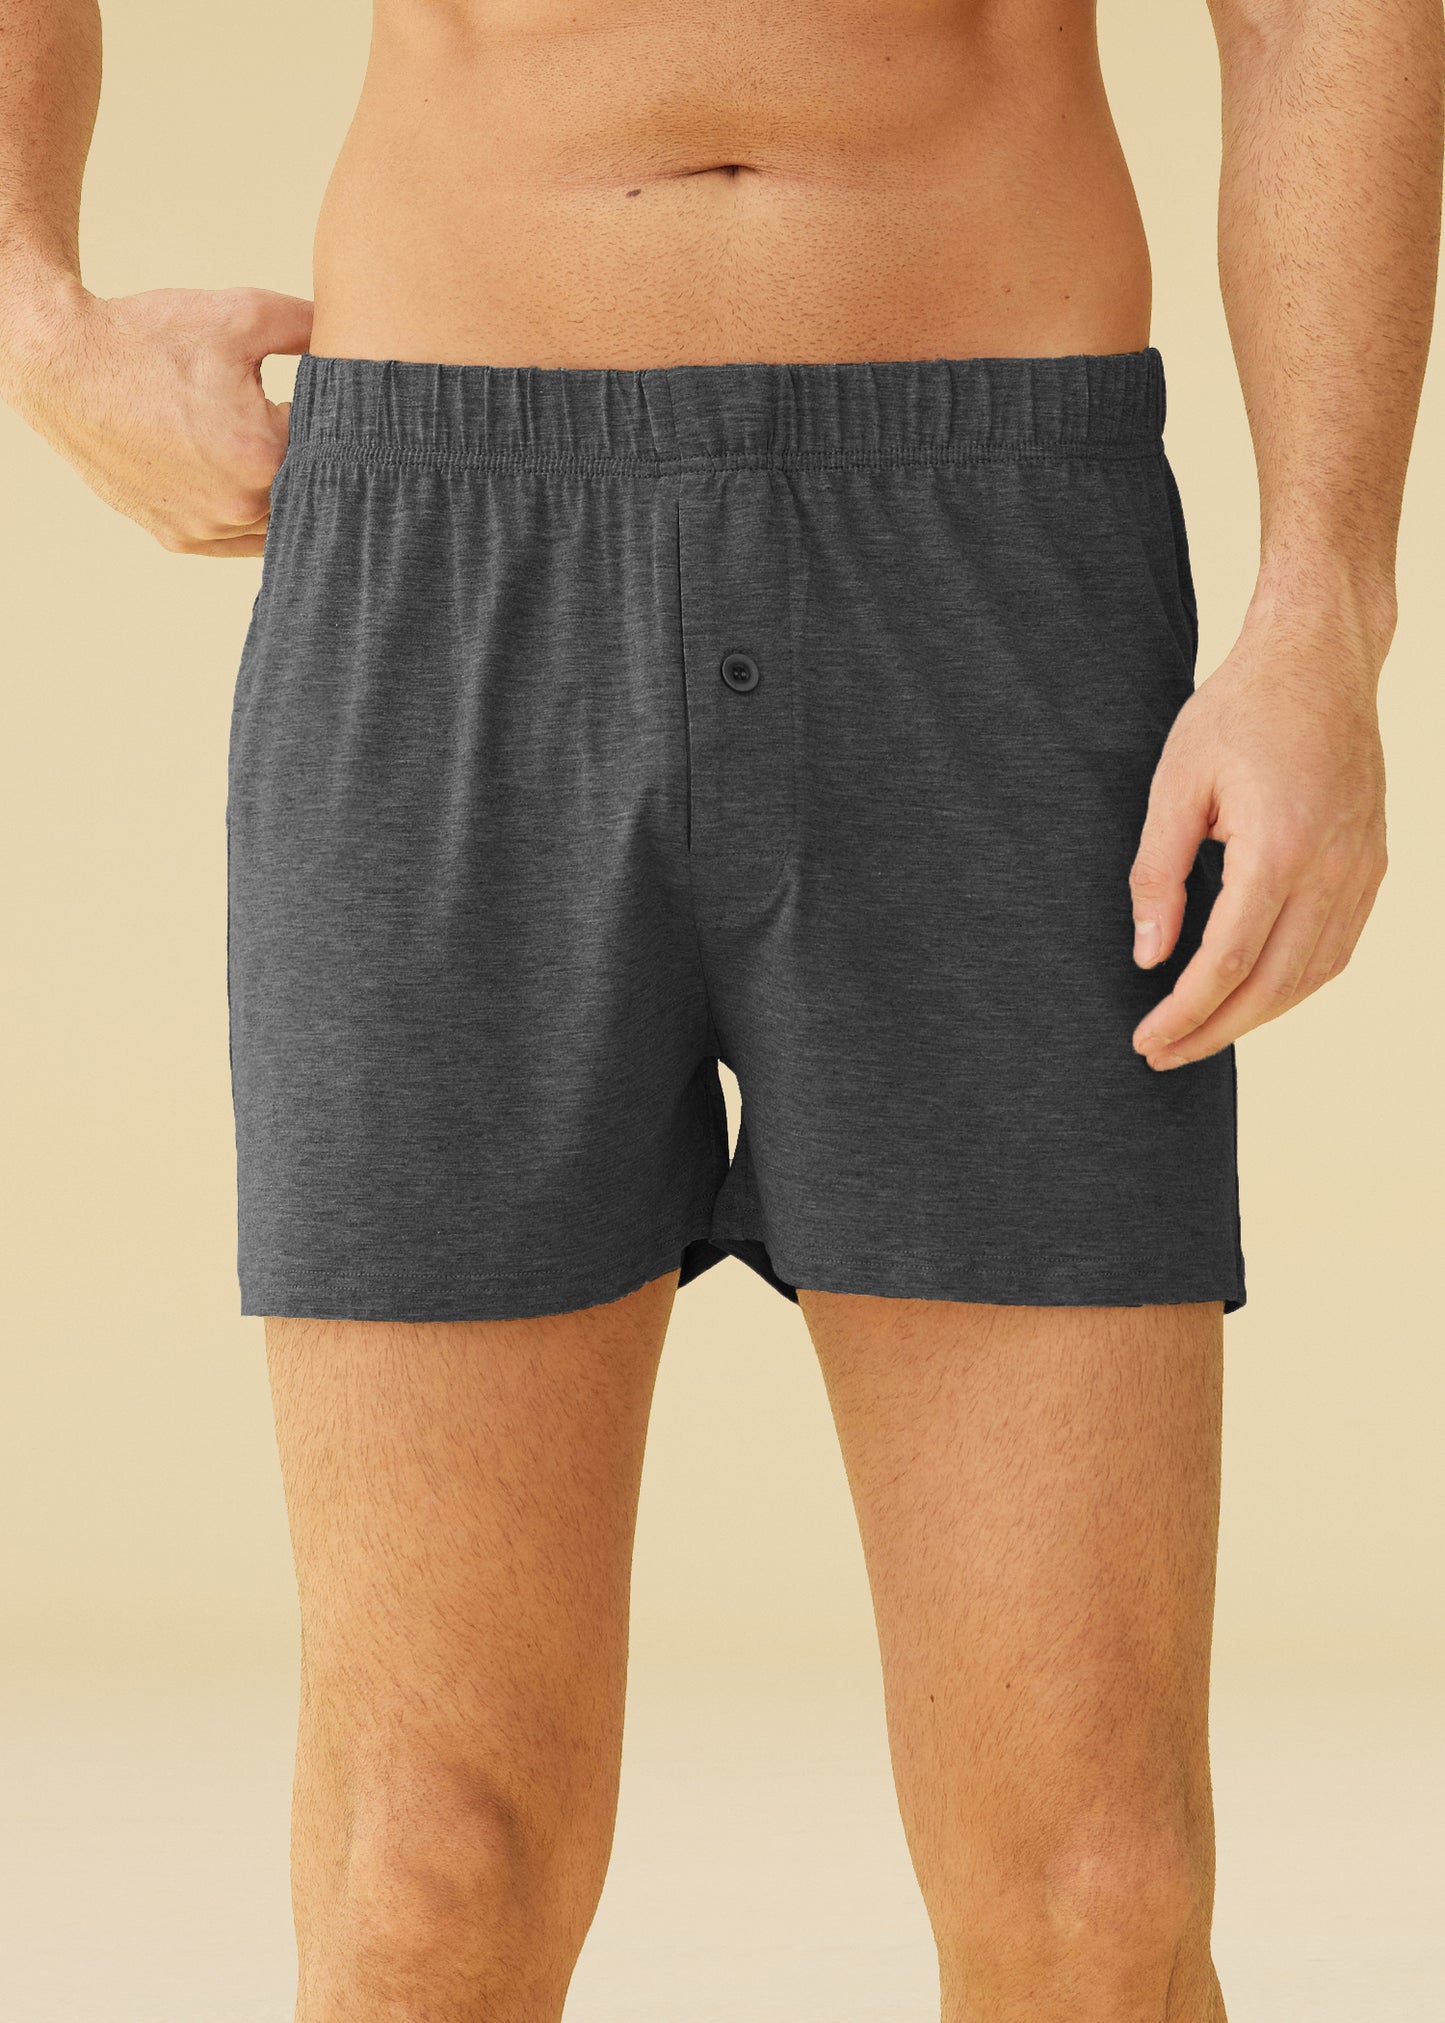 Men's Bamboo Viscose Underwear Boxer Shorts Trunk Briefs 3 Pack